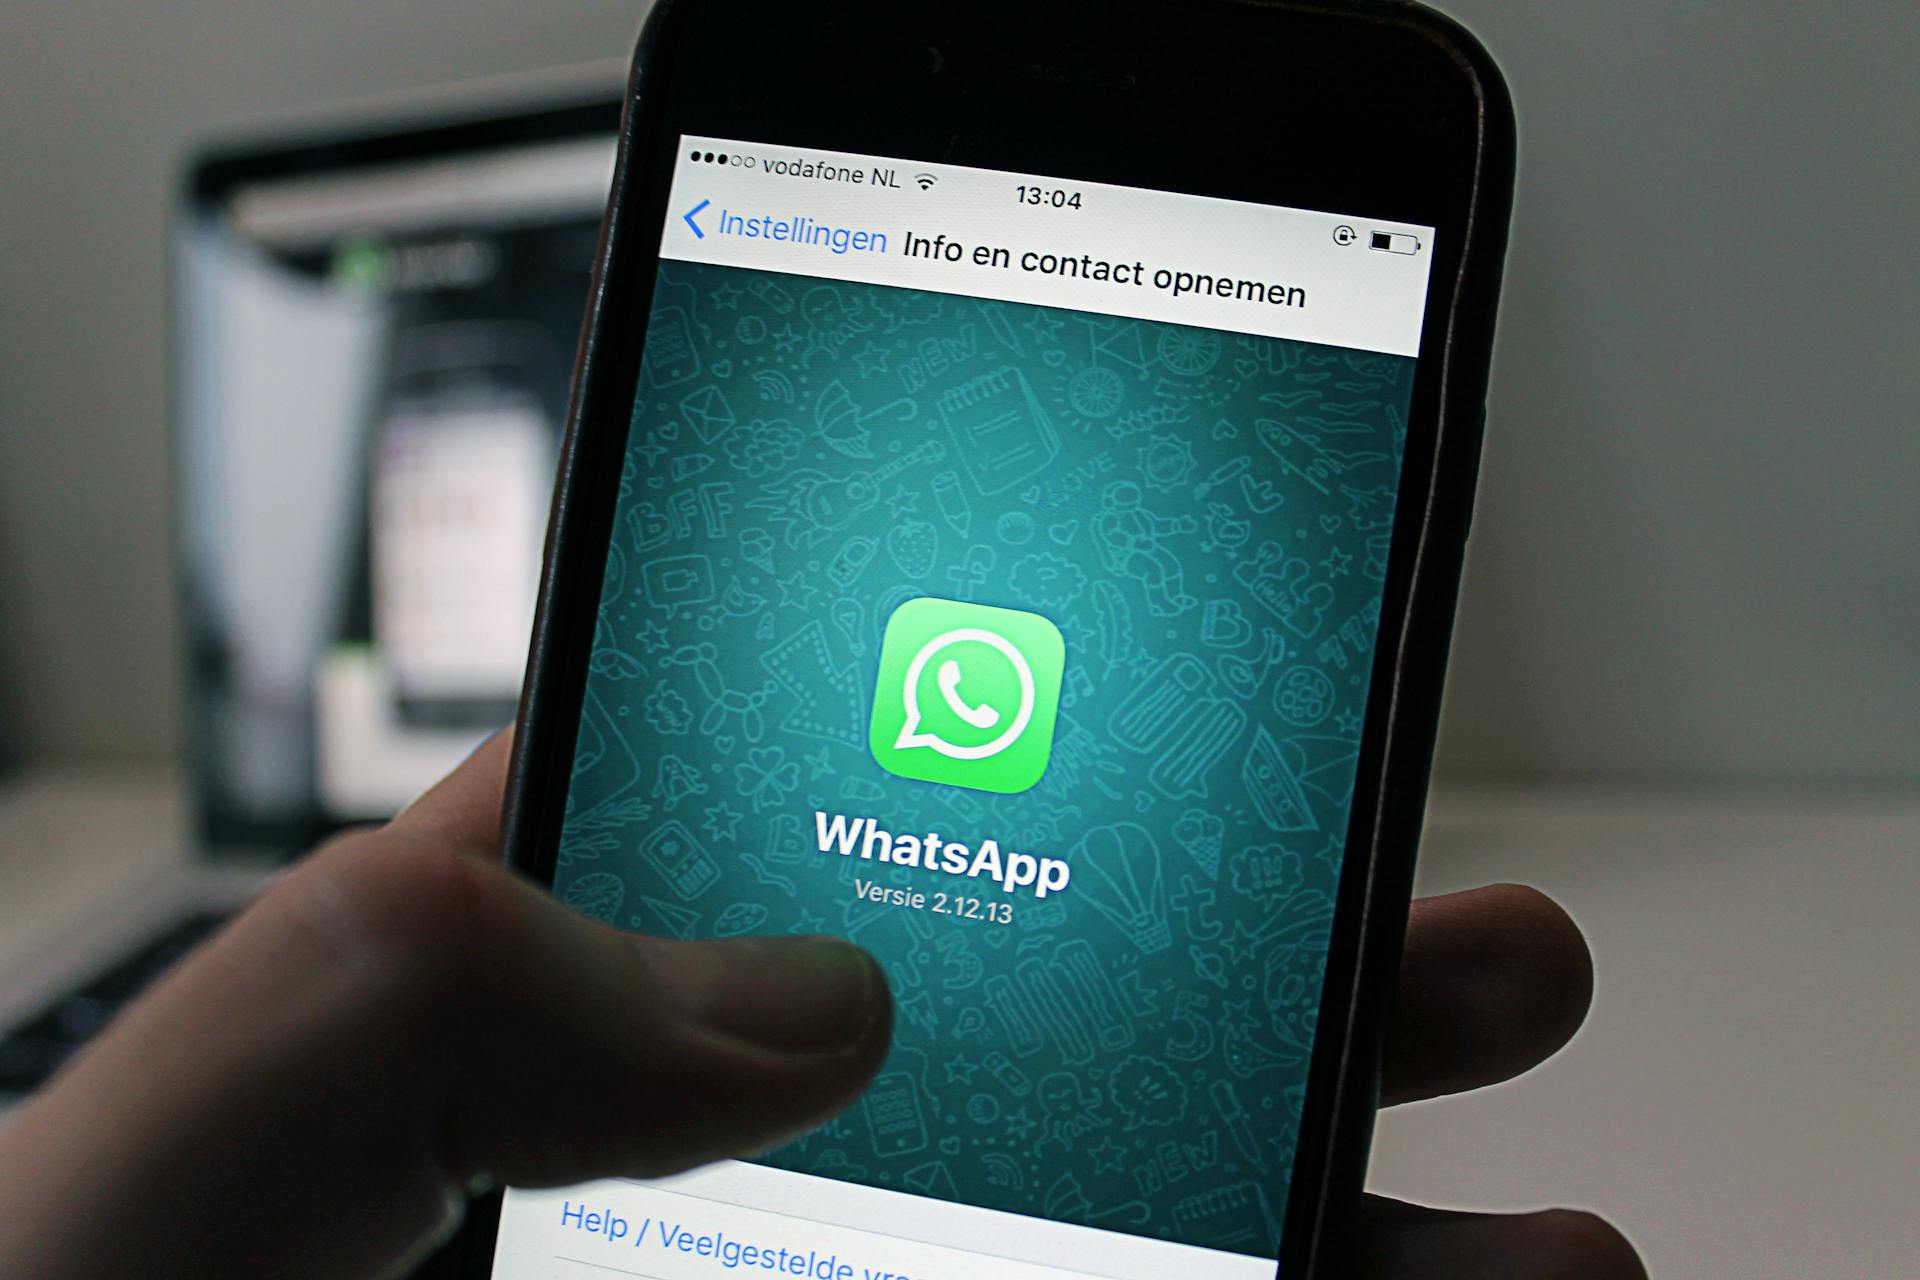 HD Videos on WhatsApp: Upgrade Now